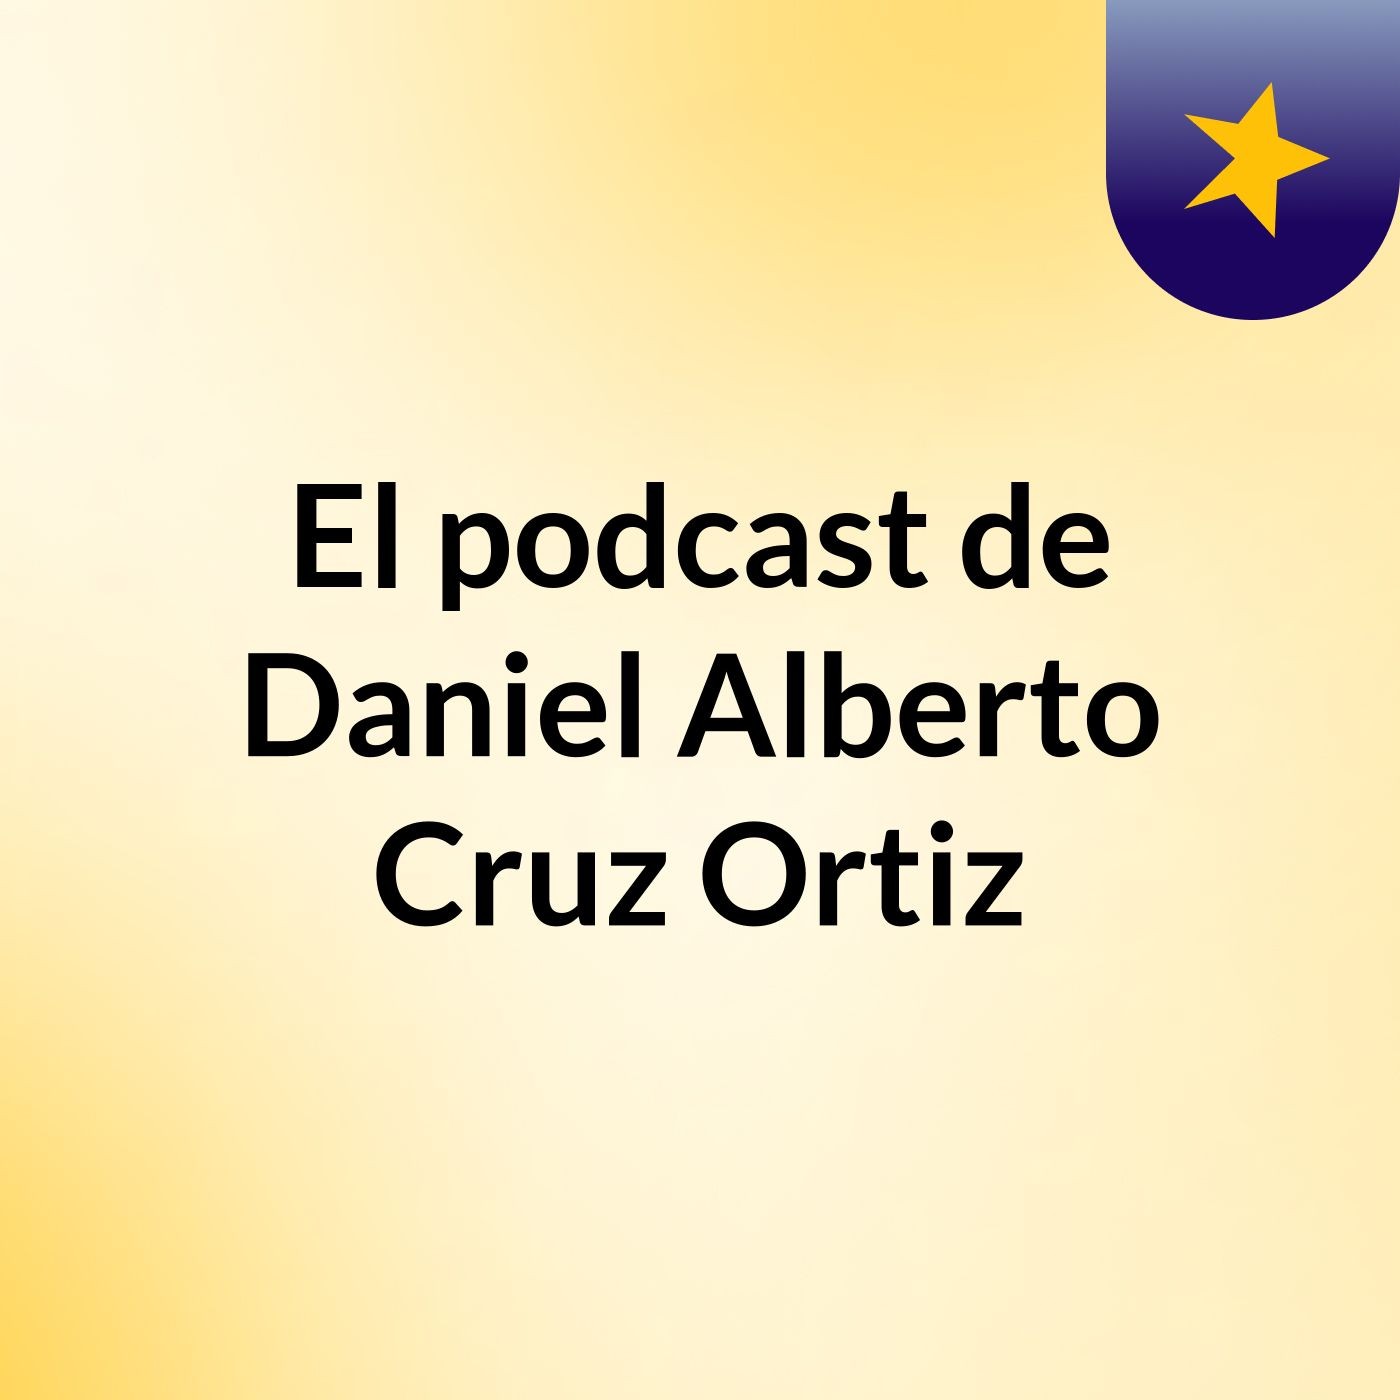 El podcast de Daniel Alberto Cruz Ortiz